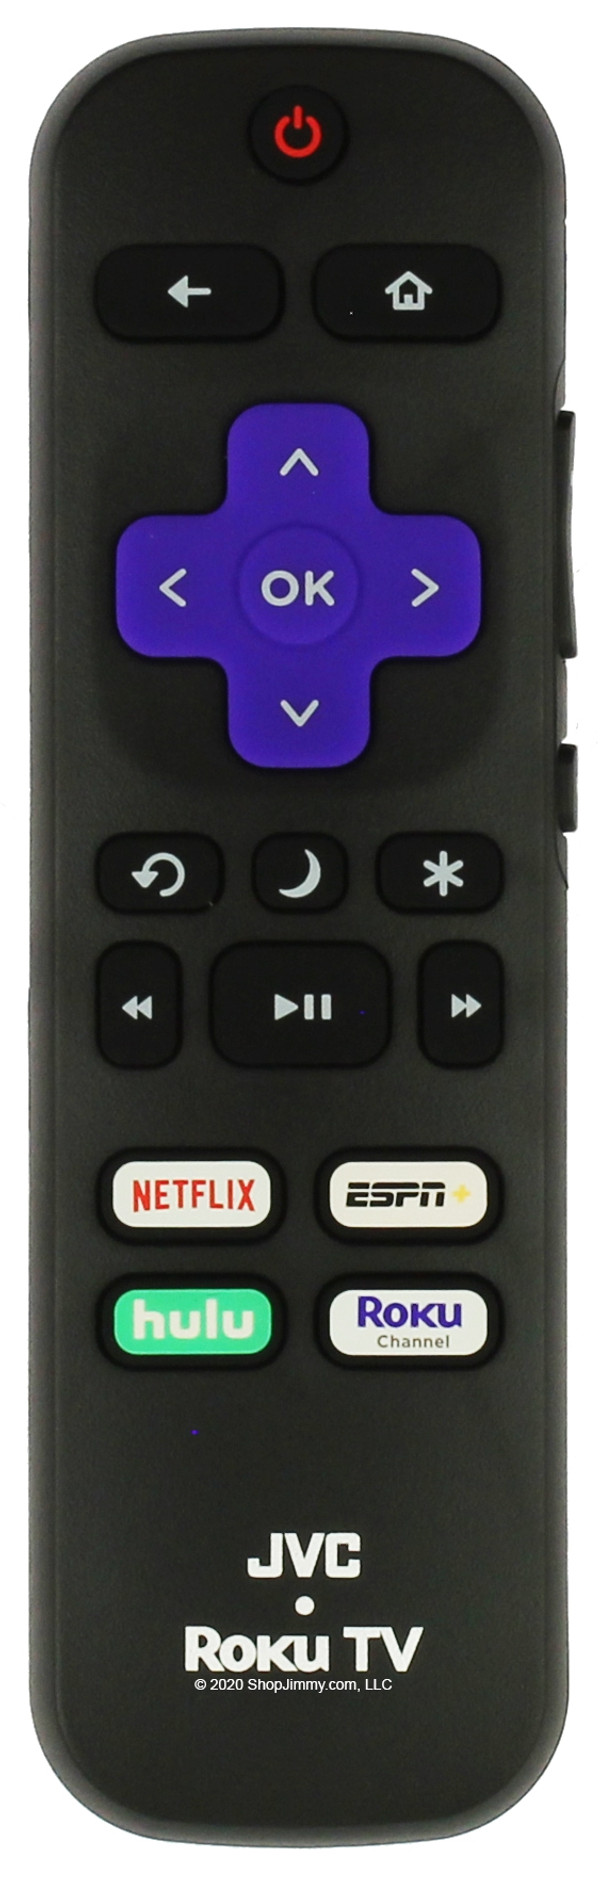 JVC RC440 Roku Remote Control w/ Netflix ESPN+ Hulu Roku--NEW